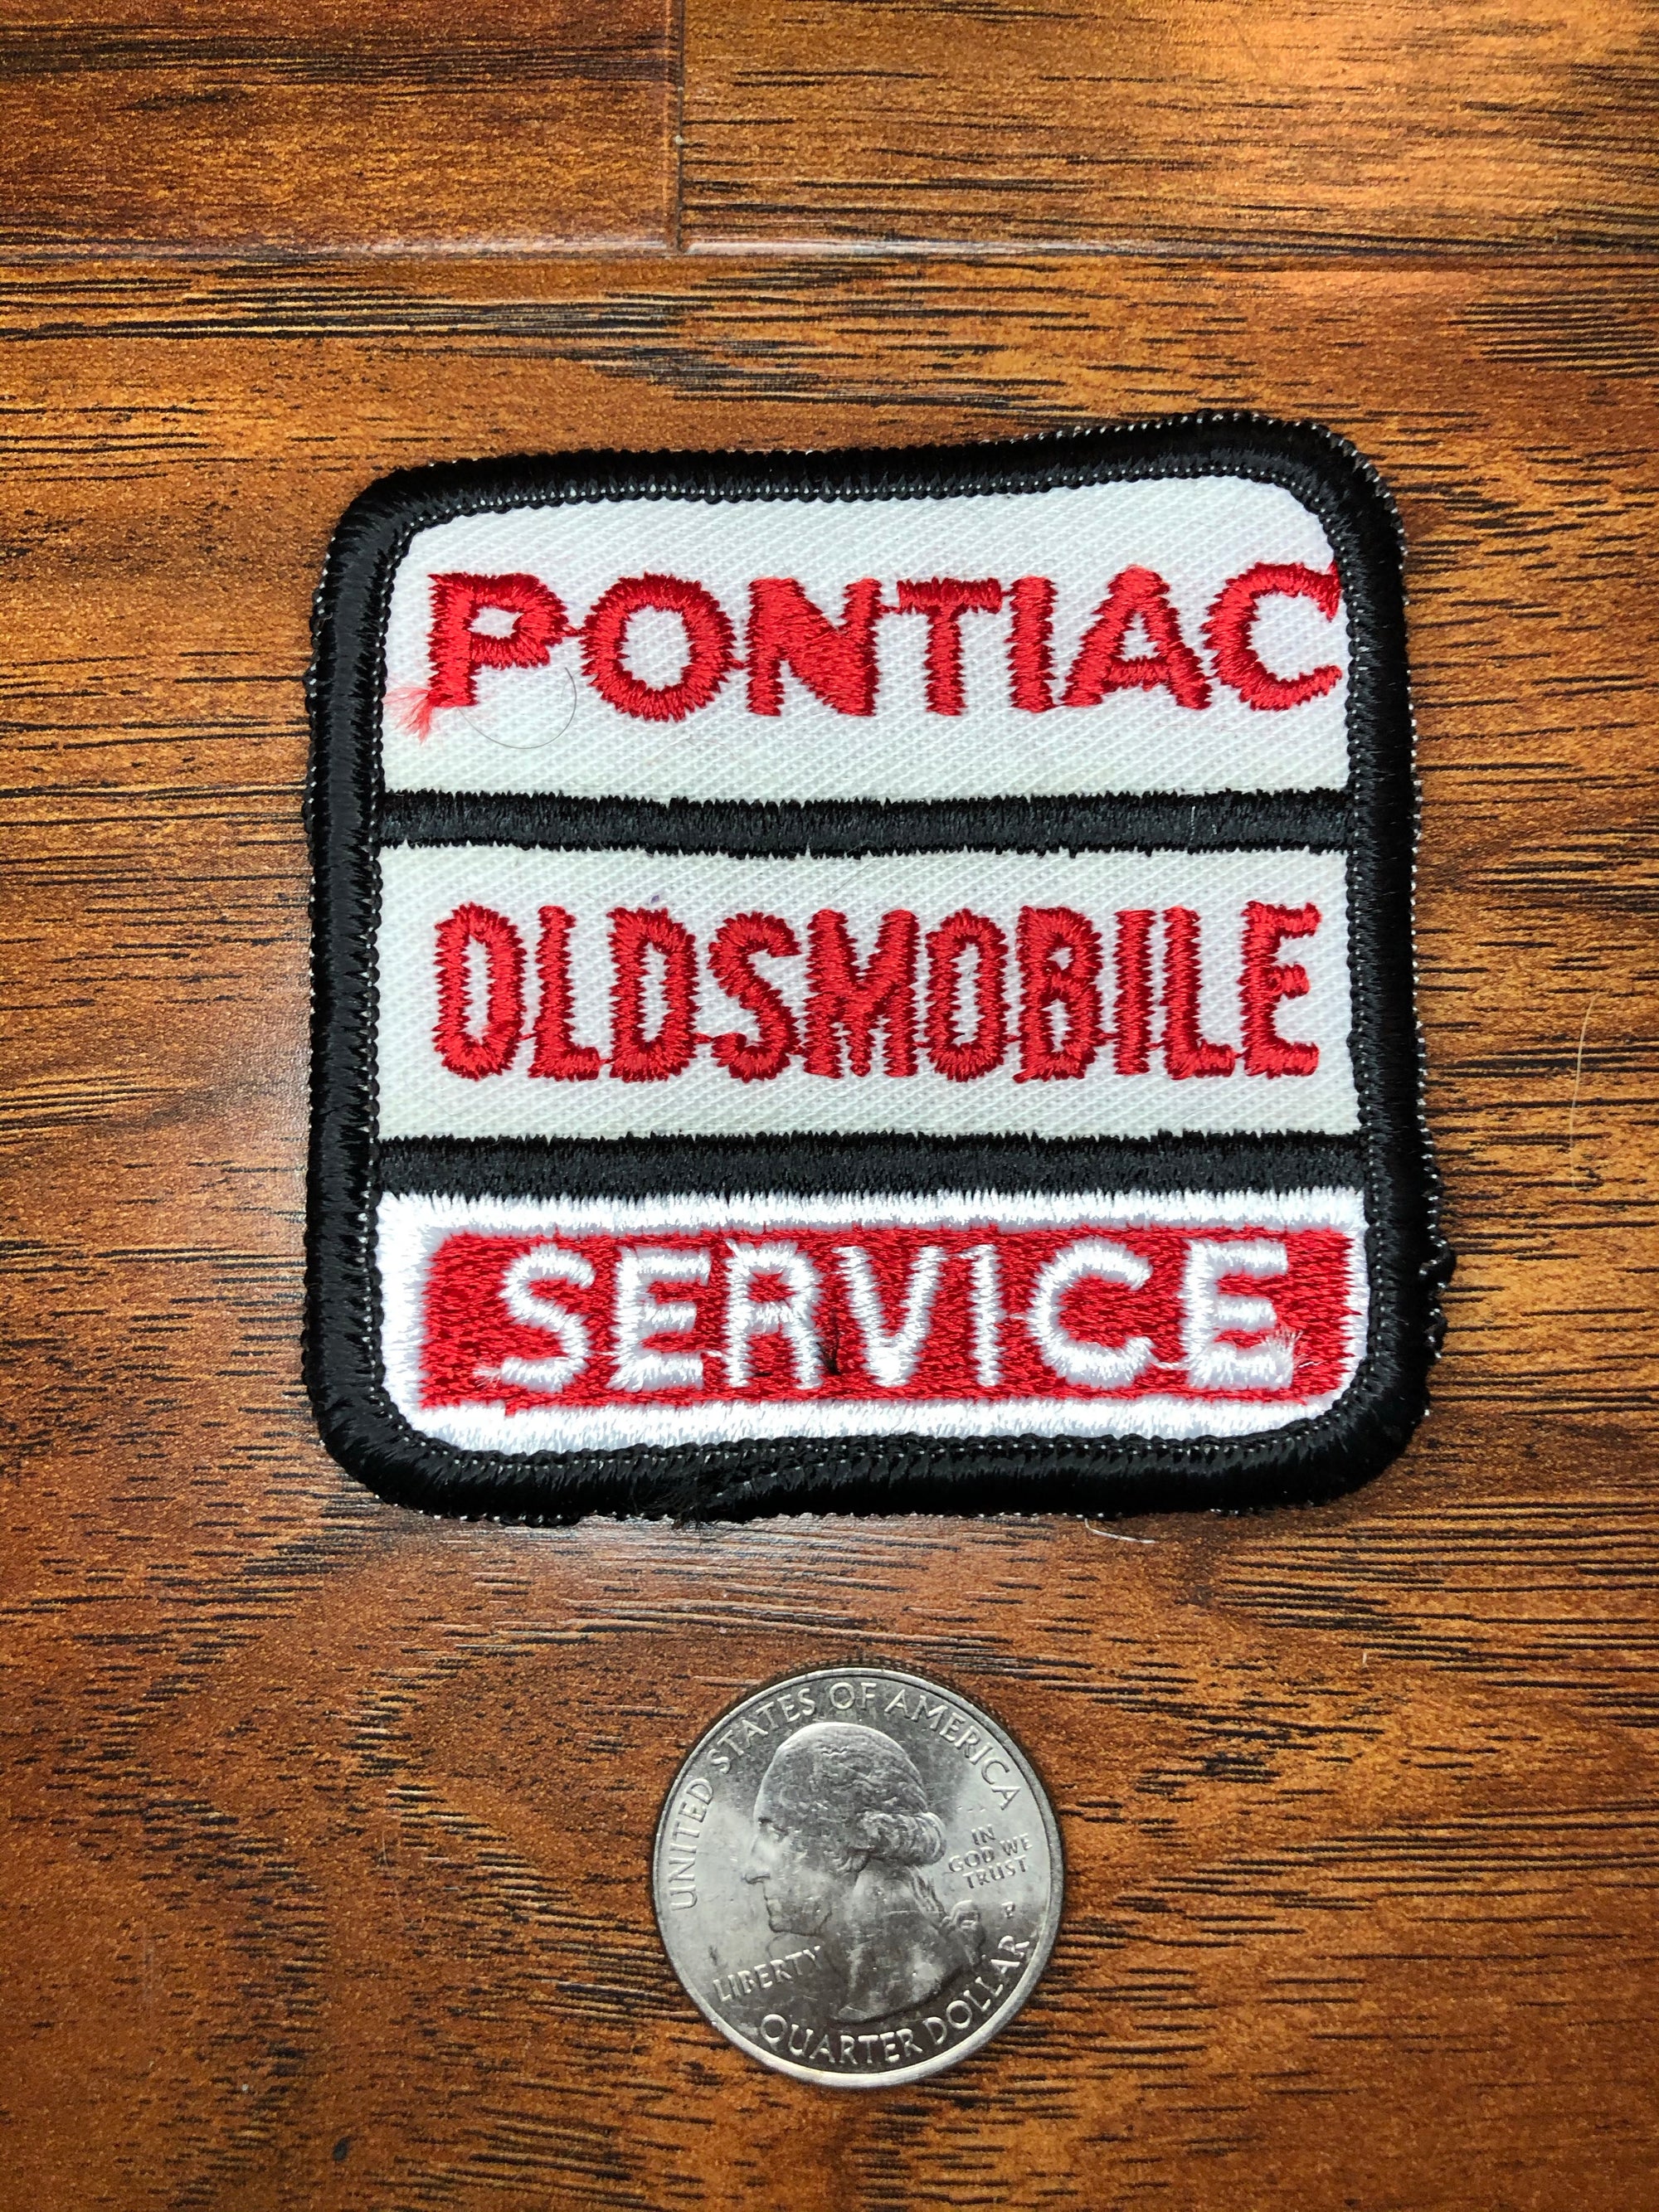 Vintage Pontiac Oldsmobile Service